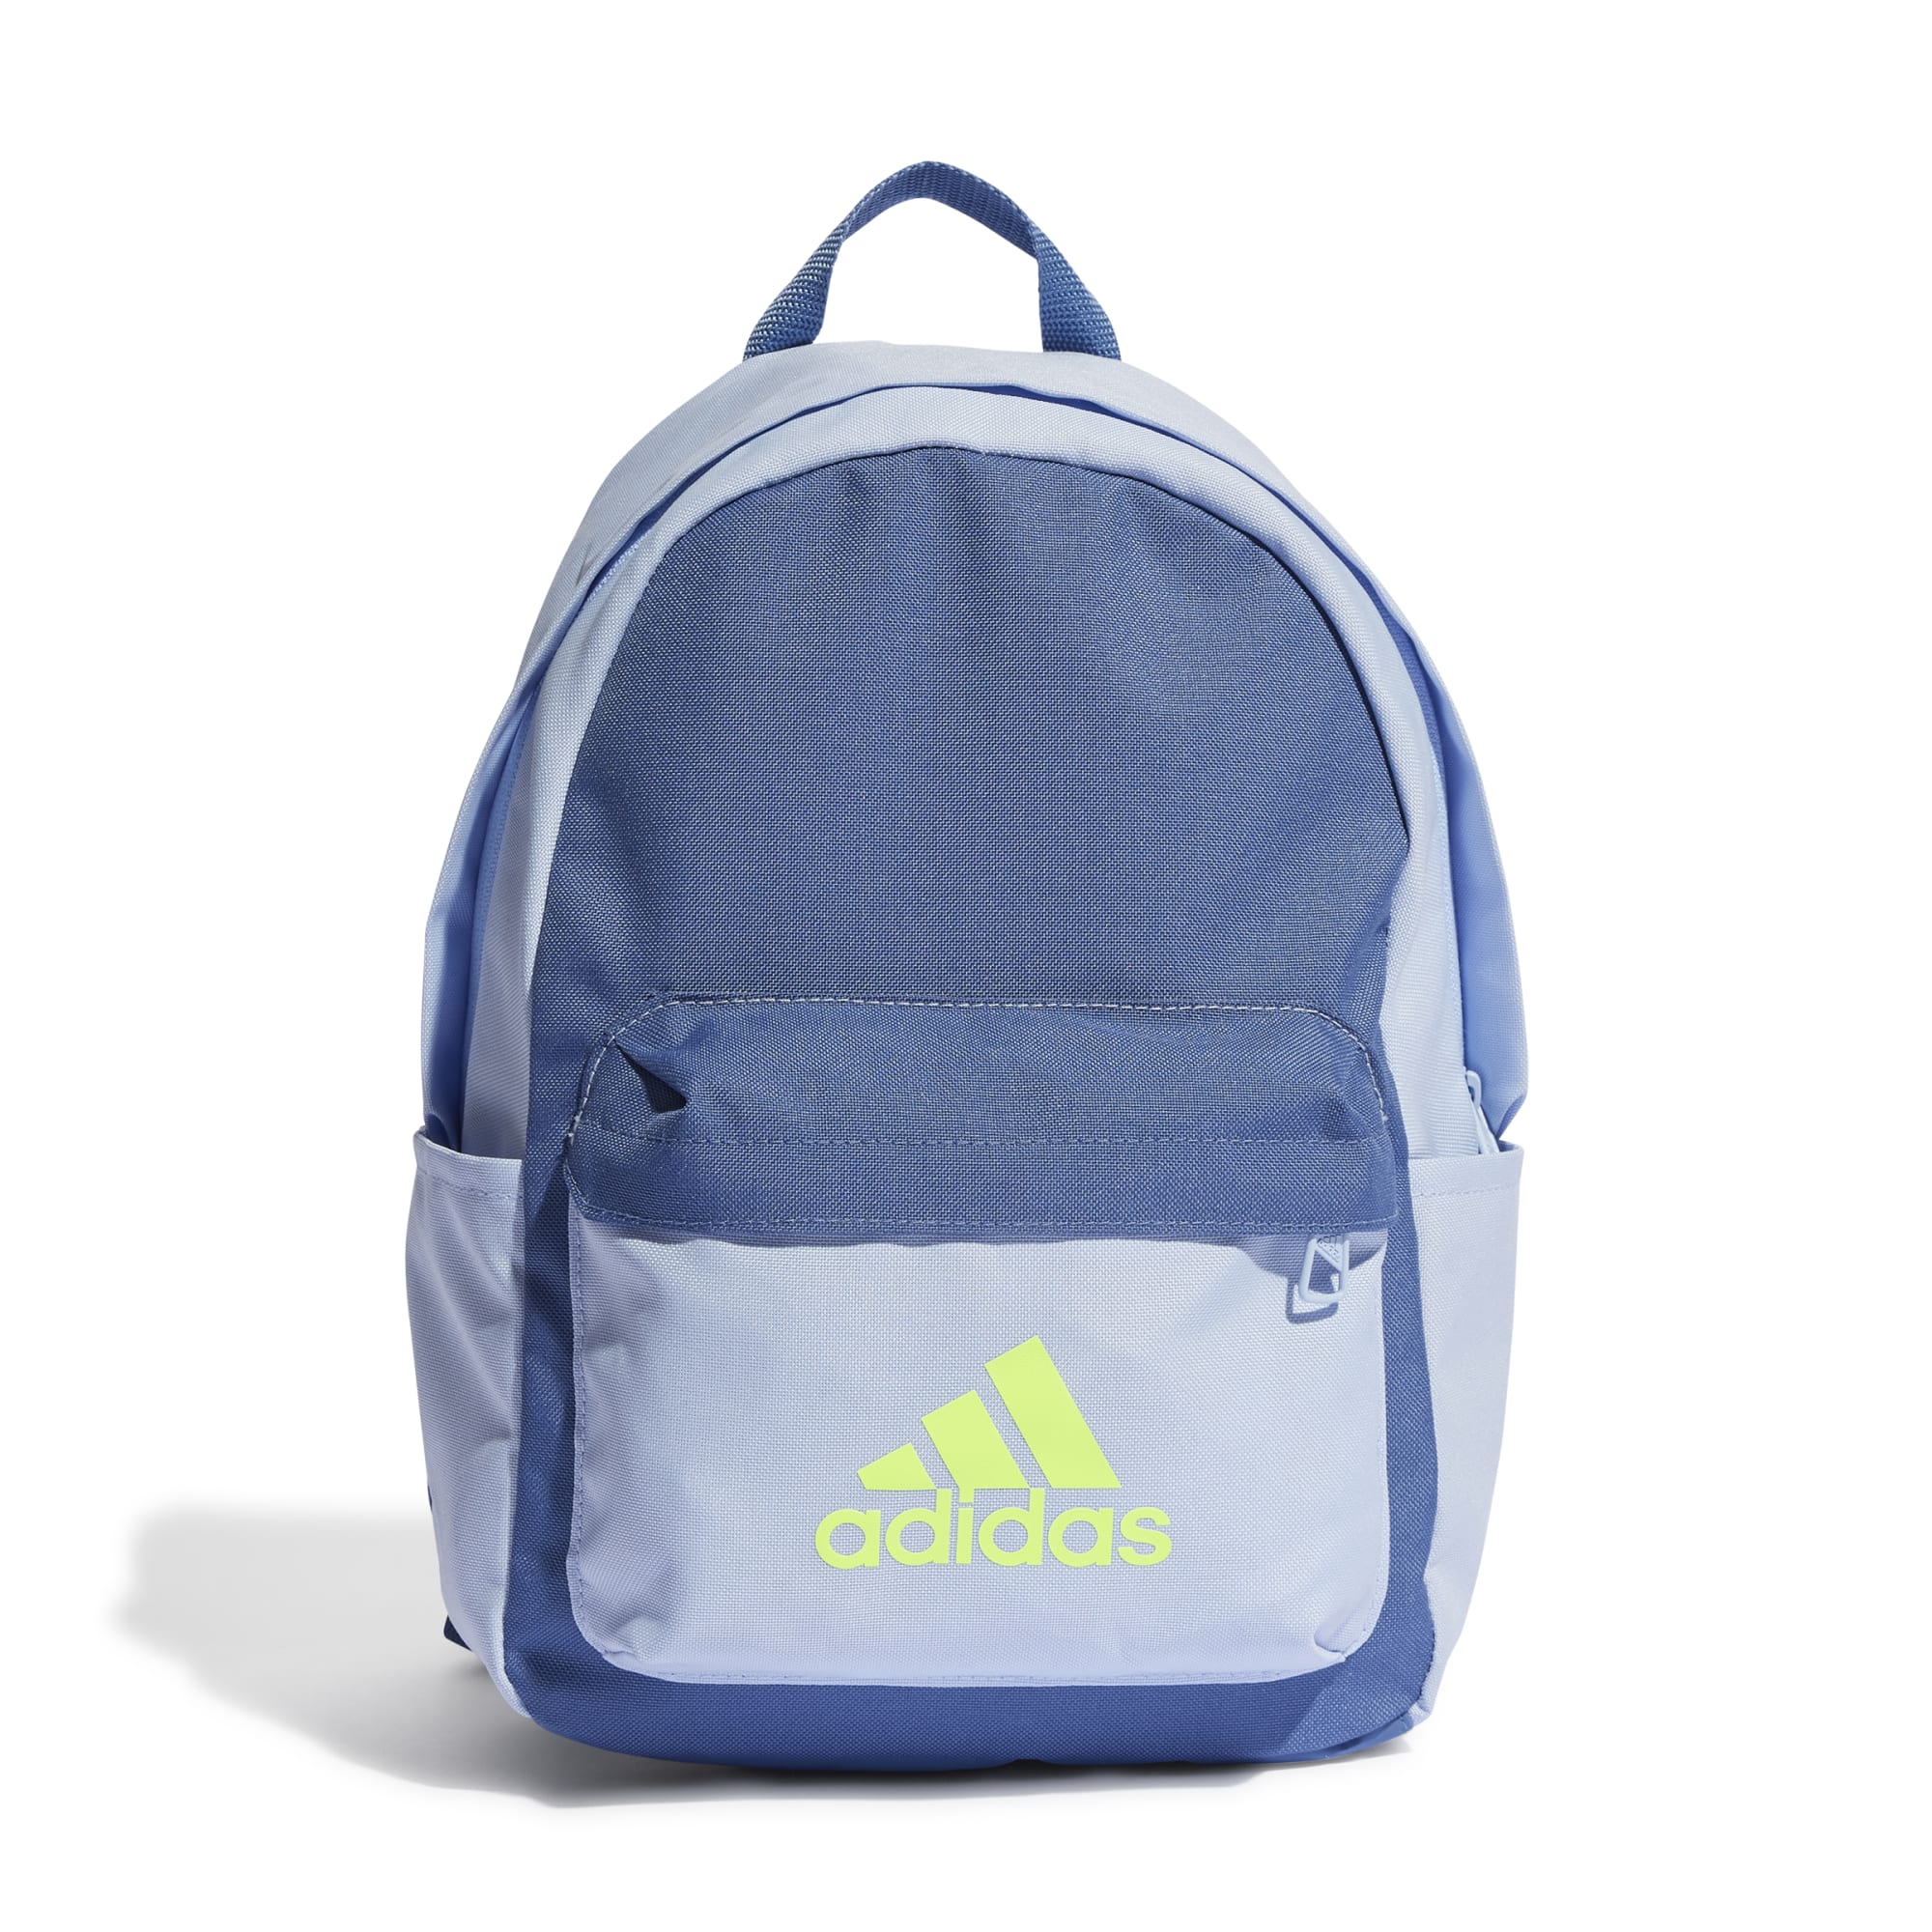 Adidas Yoga Backpack - HZ5943